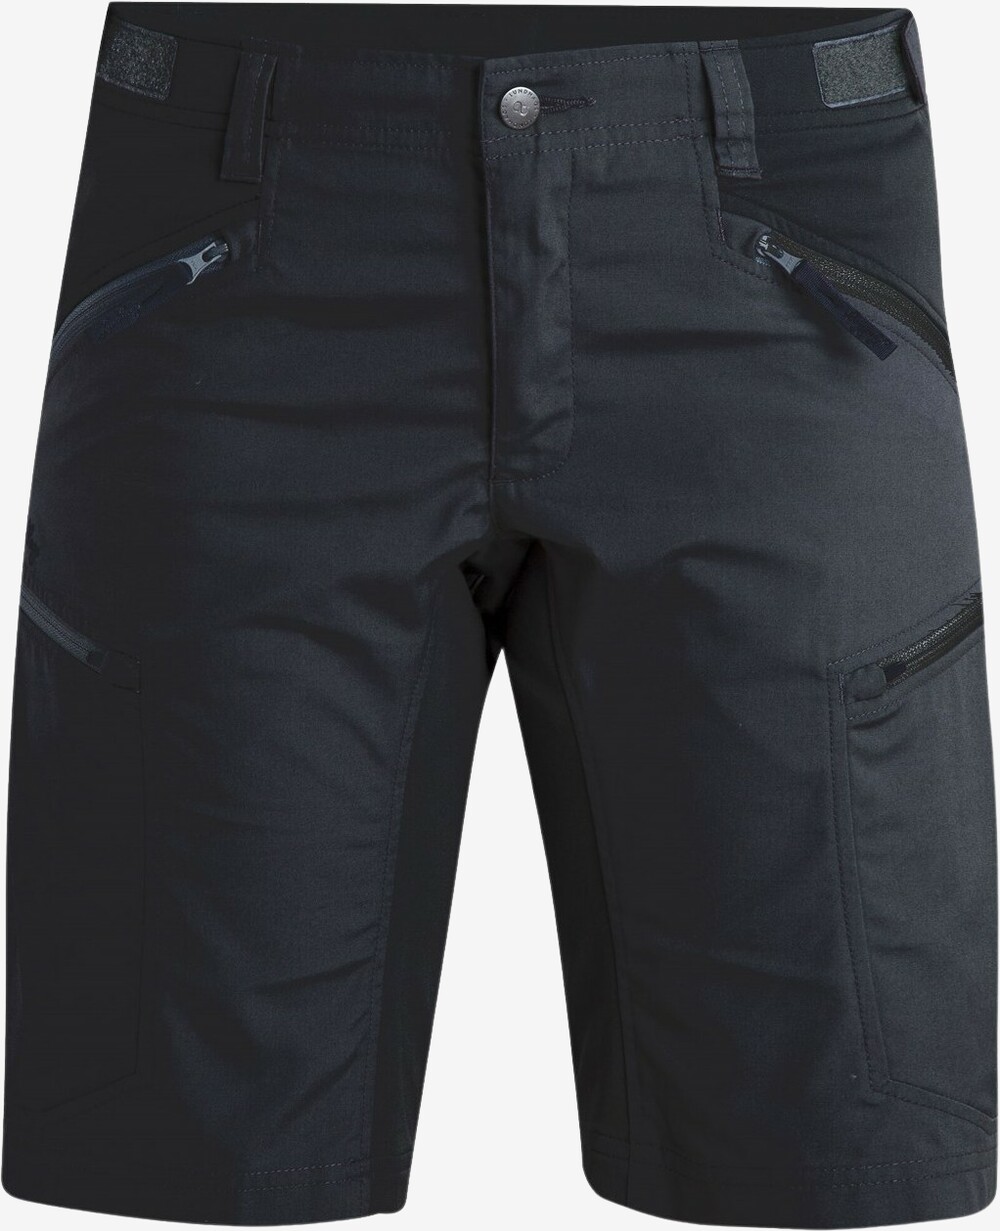 Se Lundhags - Makke II Ws shorts (Sort) - 44 (XL) hos Friluft.dk